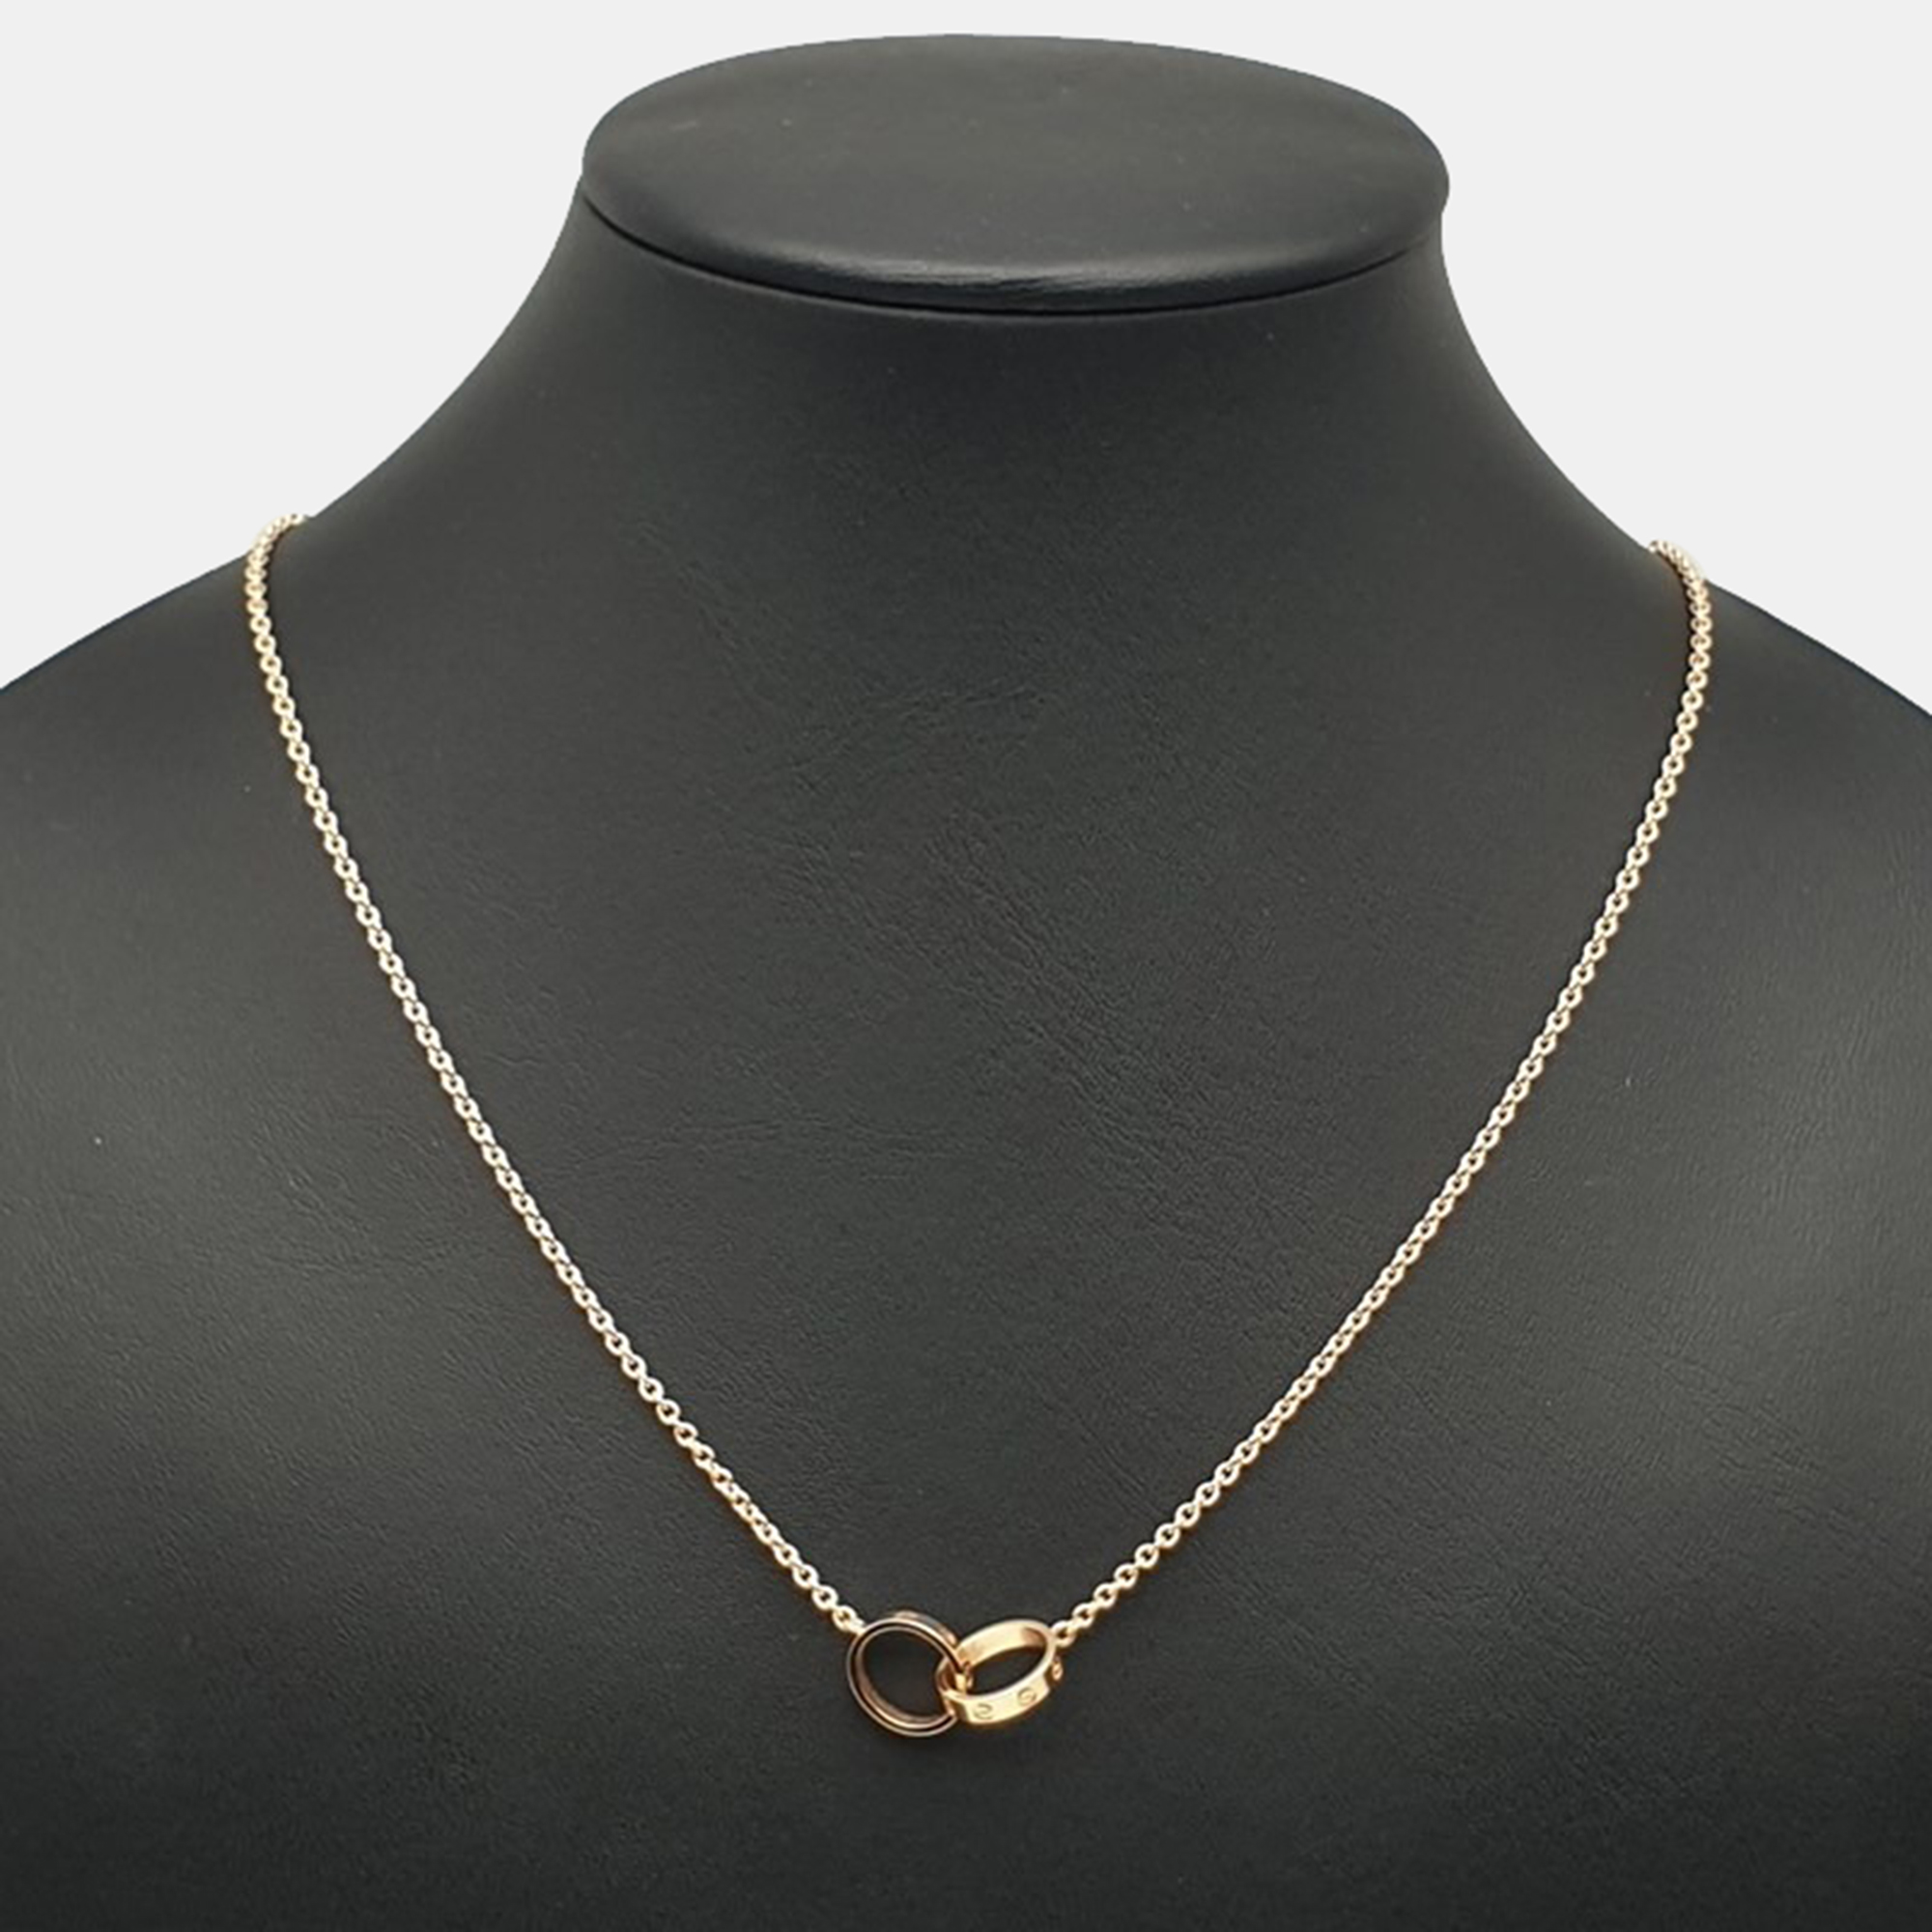 Cartier 18k rose gold love necklace